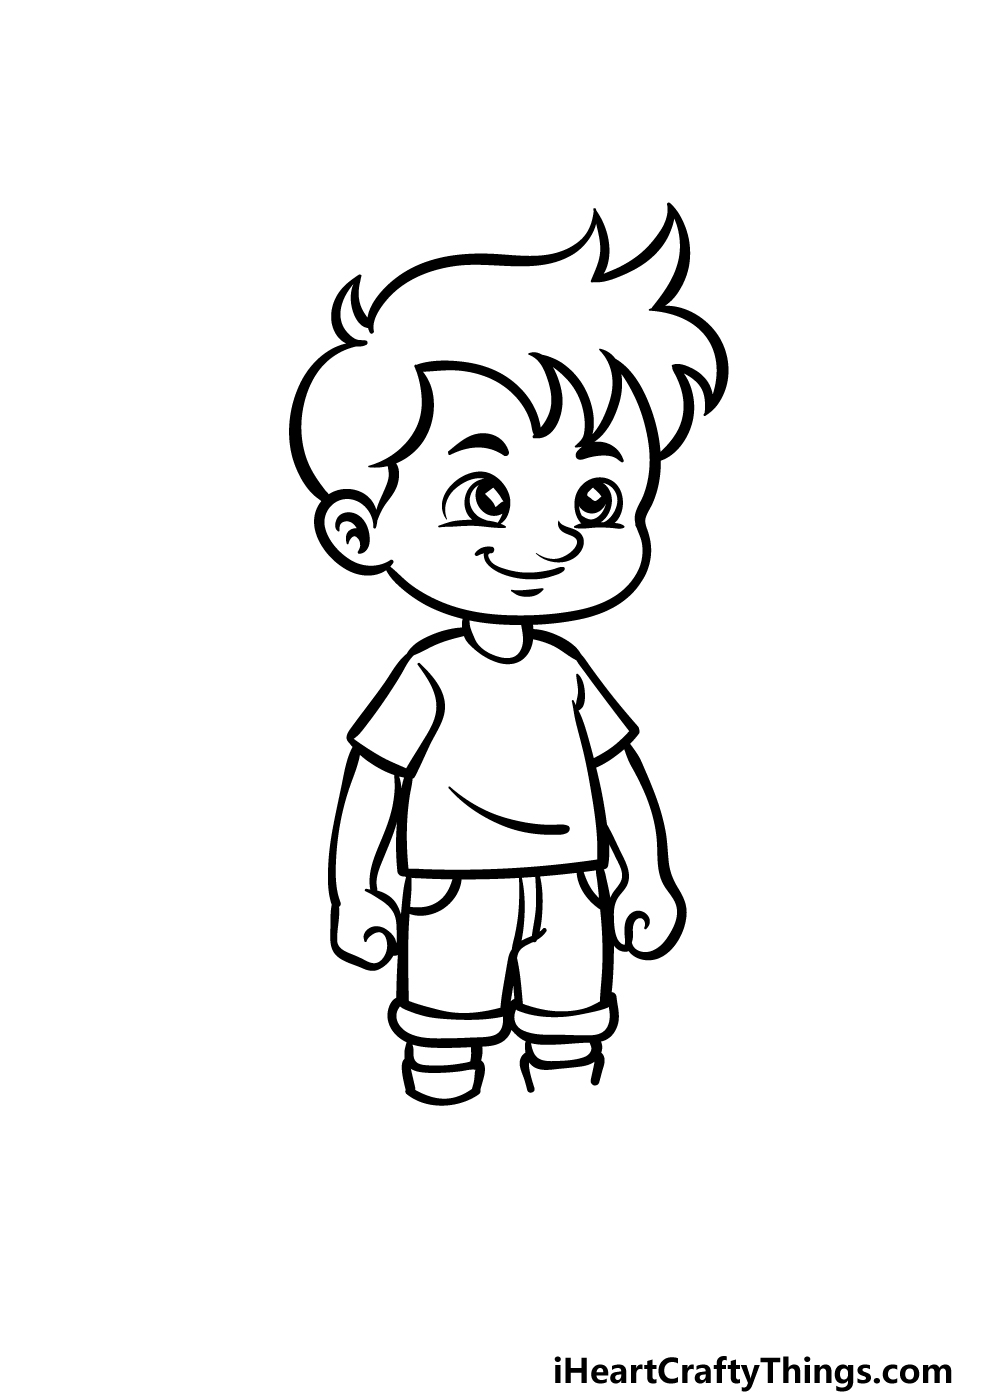 how to draw a cartoon boy step 4